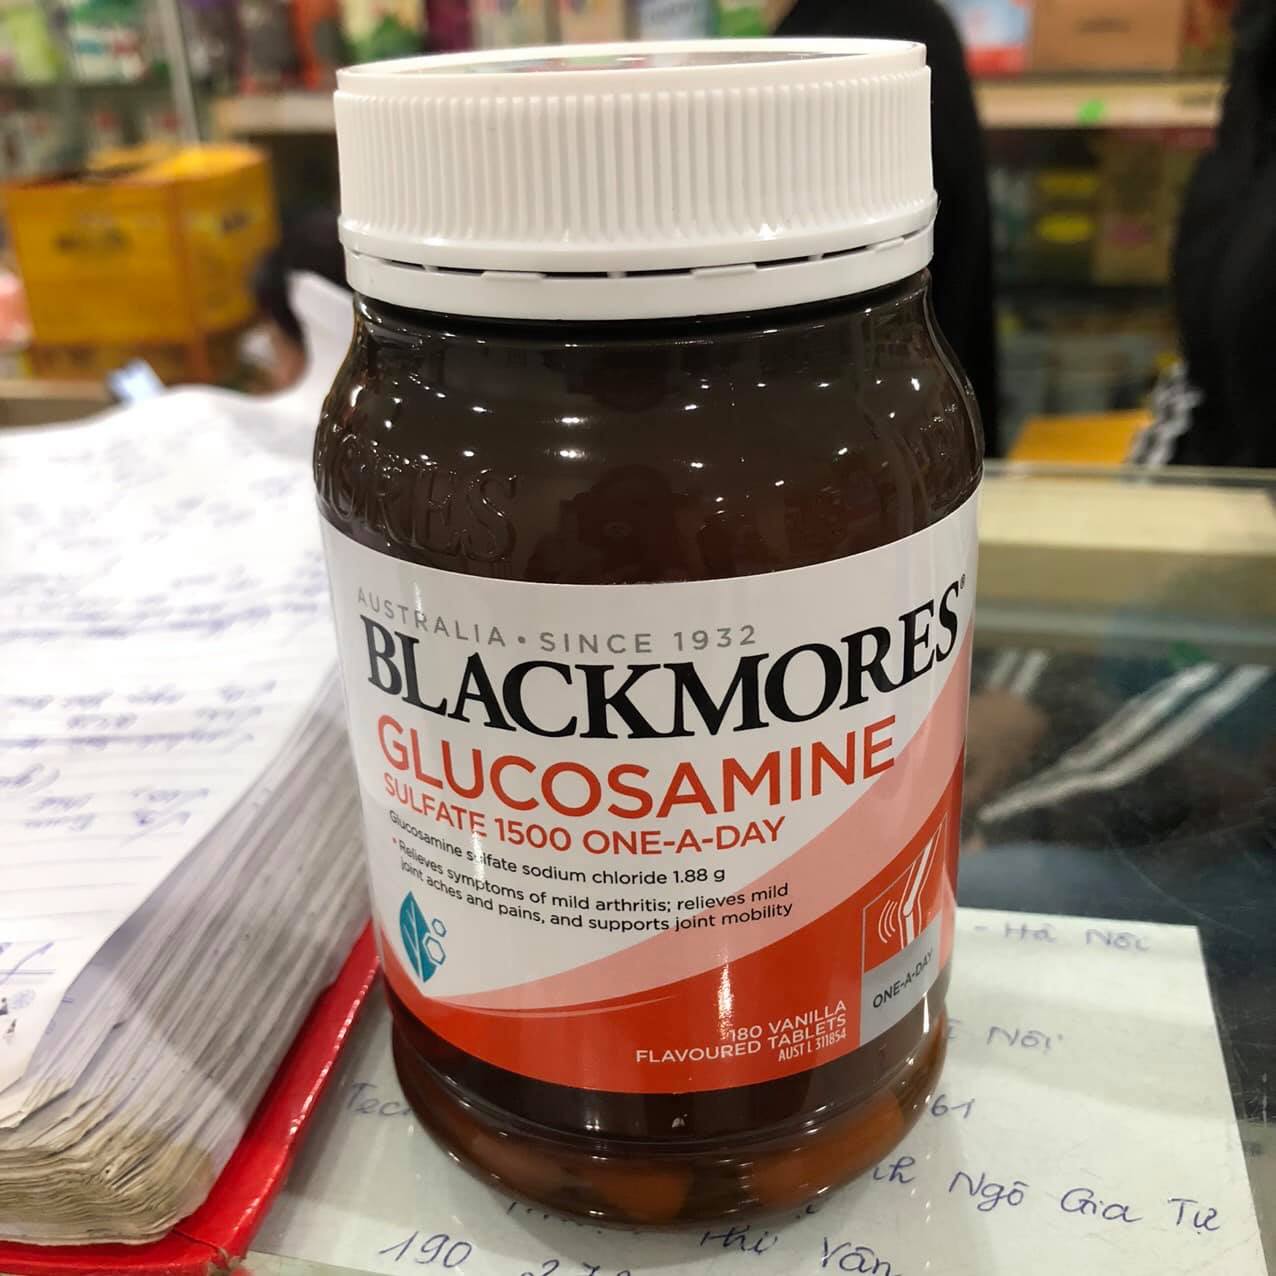 Blackmores Glucosamine 1500mg 180 viên